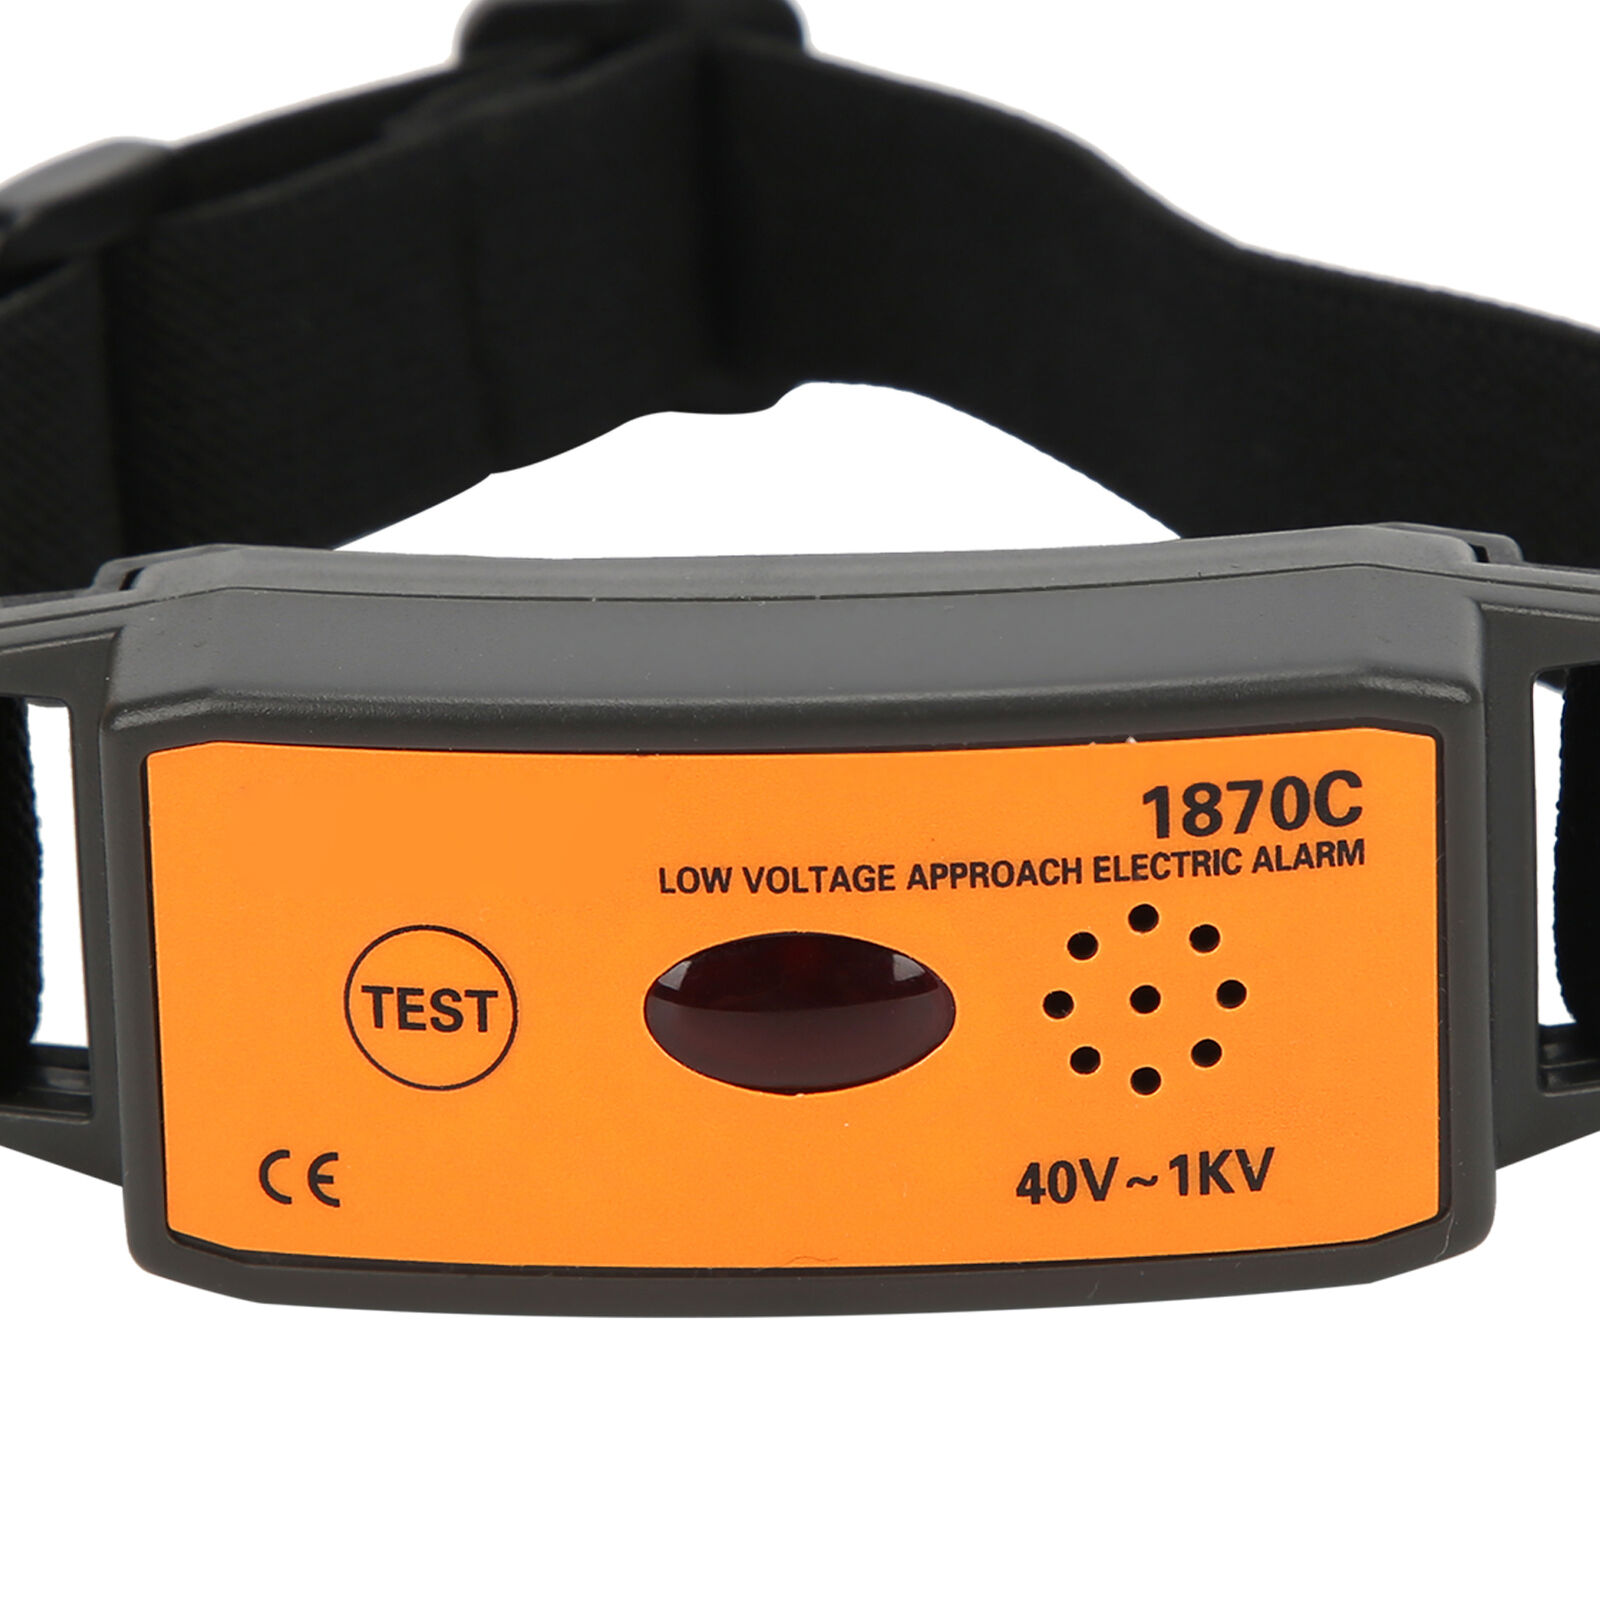 ETCR1870C 40V1KV Arm Type High Voltage Approach Electric Alarm Safety Detector